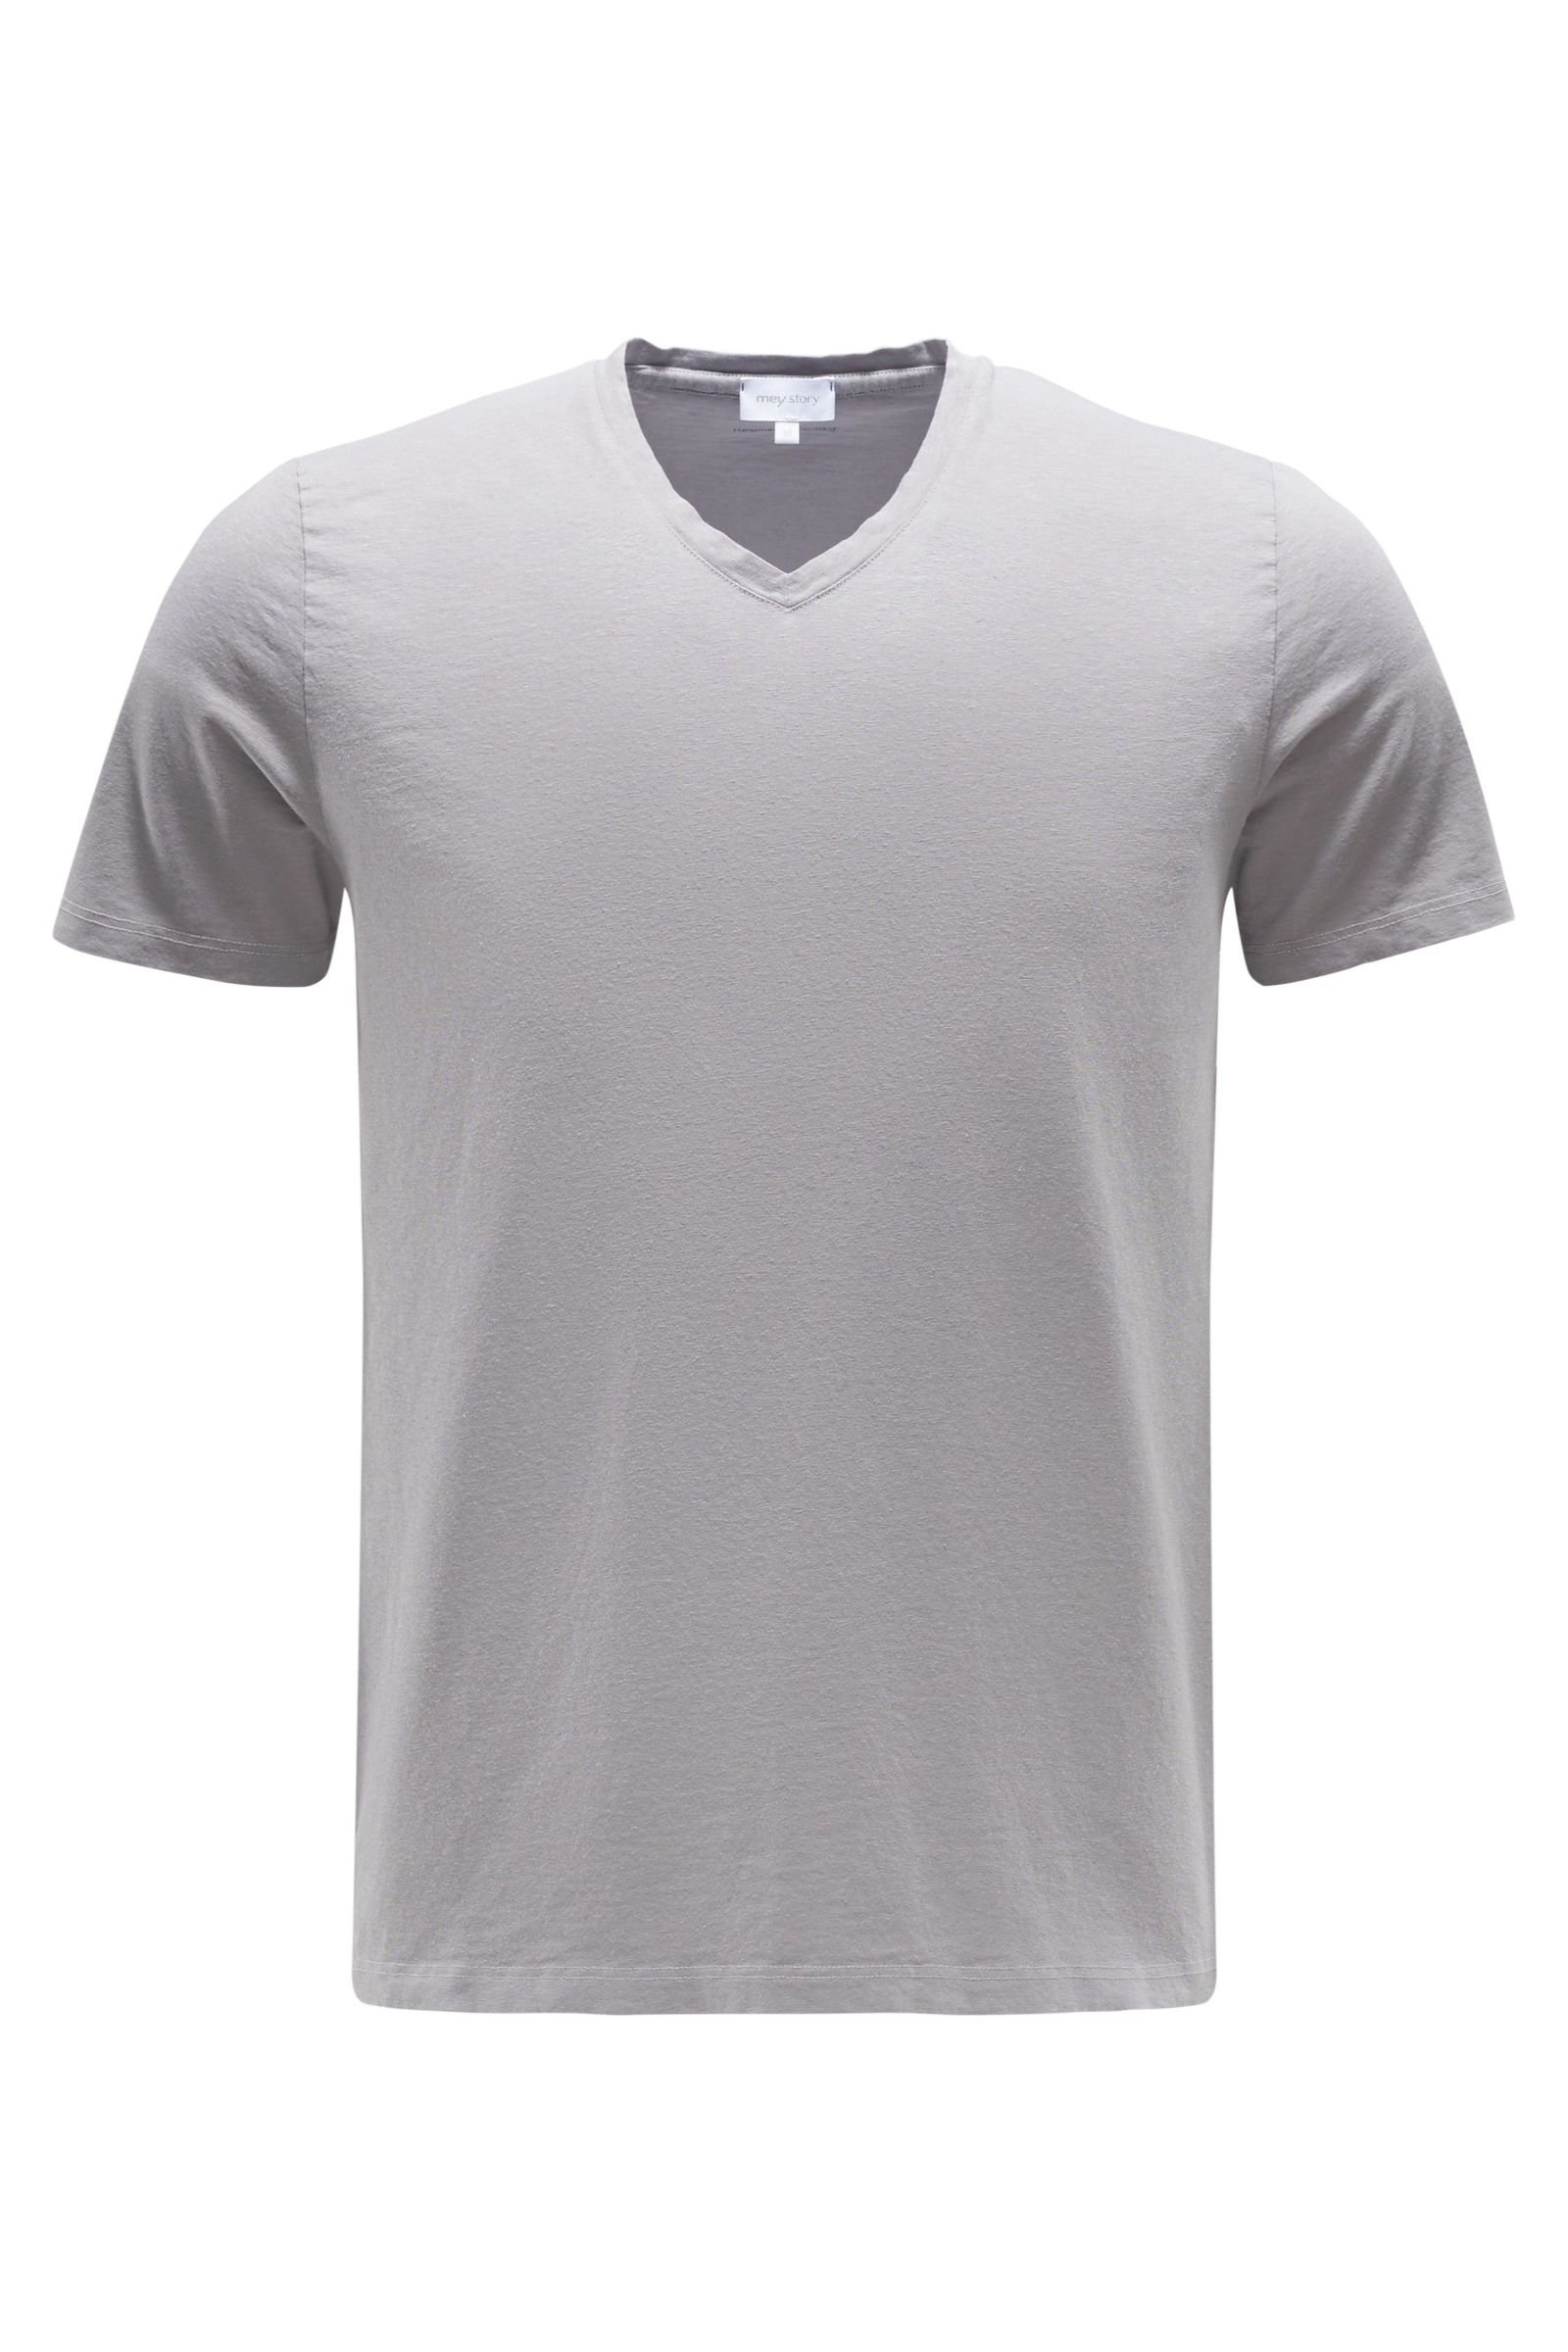 V-neck T-shirt light grey